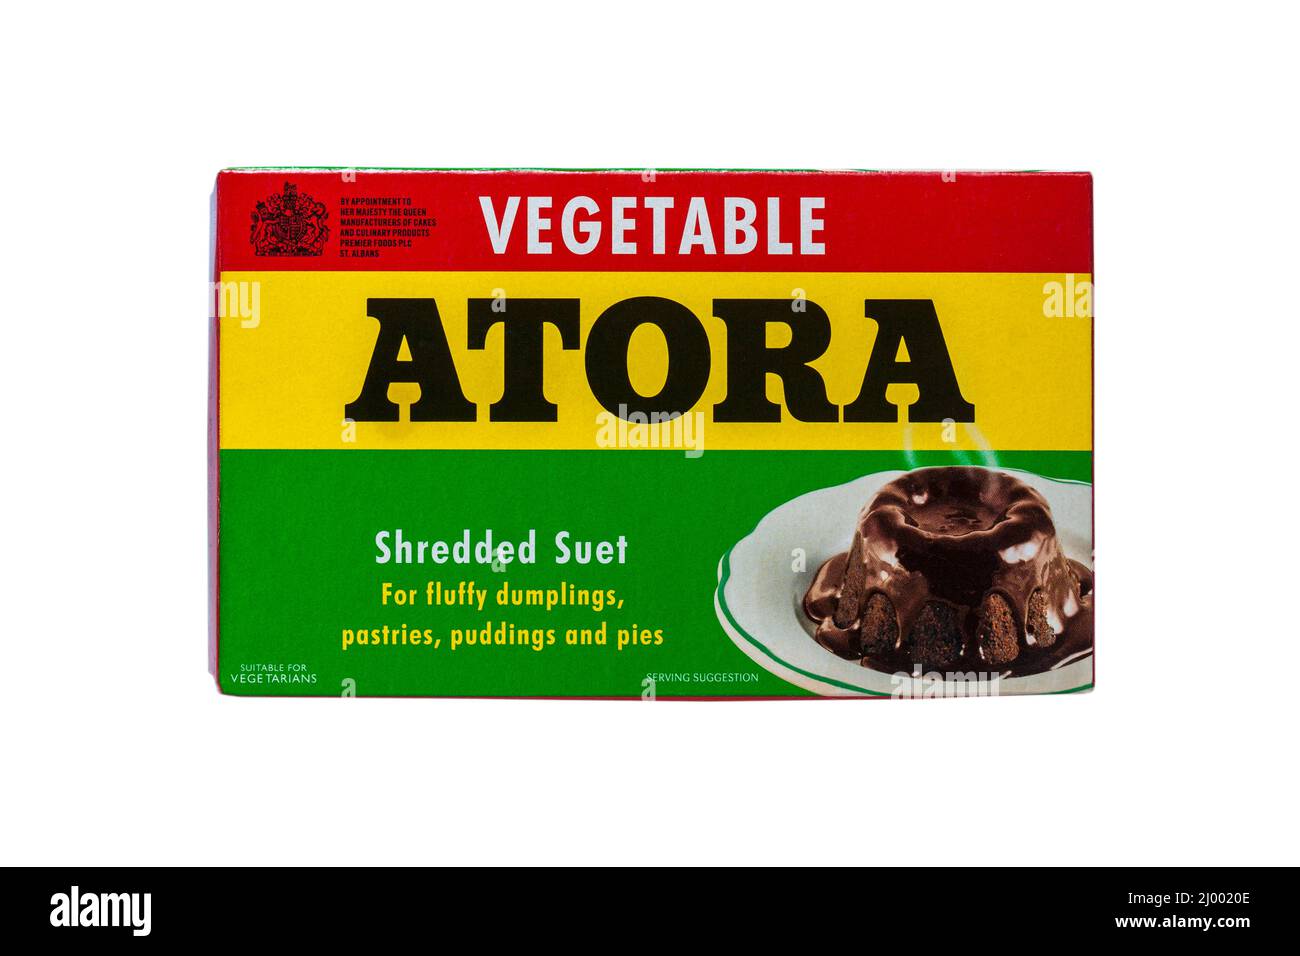 Box of Atora Vegetable Shredded Suet isolated on white background